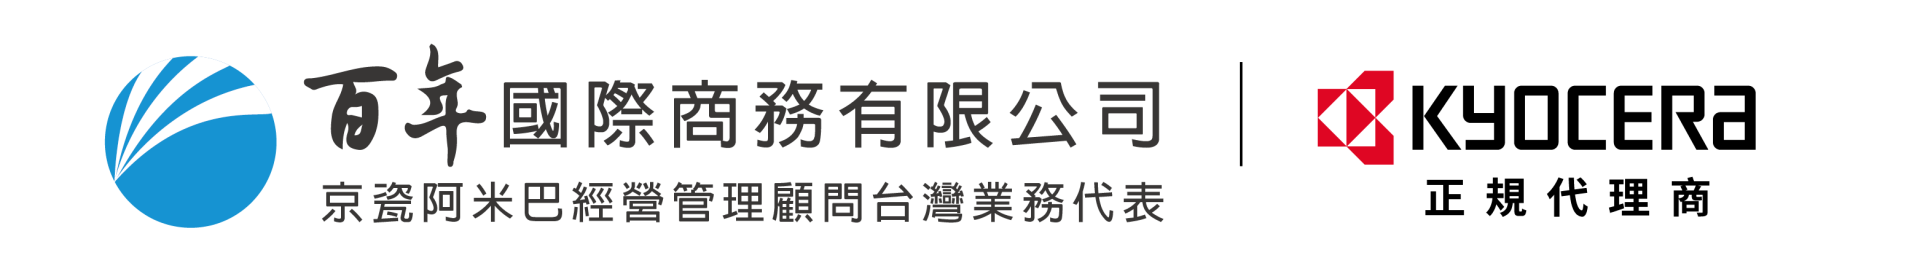 兩個logo_百年國際商務與京瓷-Logo-Conncet-Business-2022.02.11-01